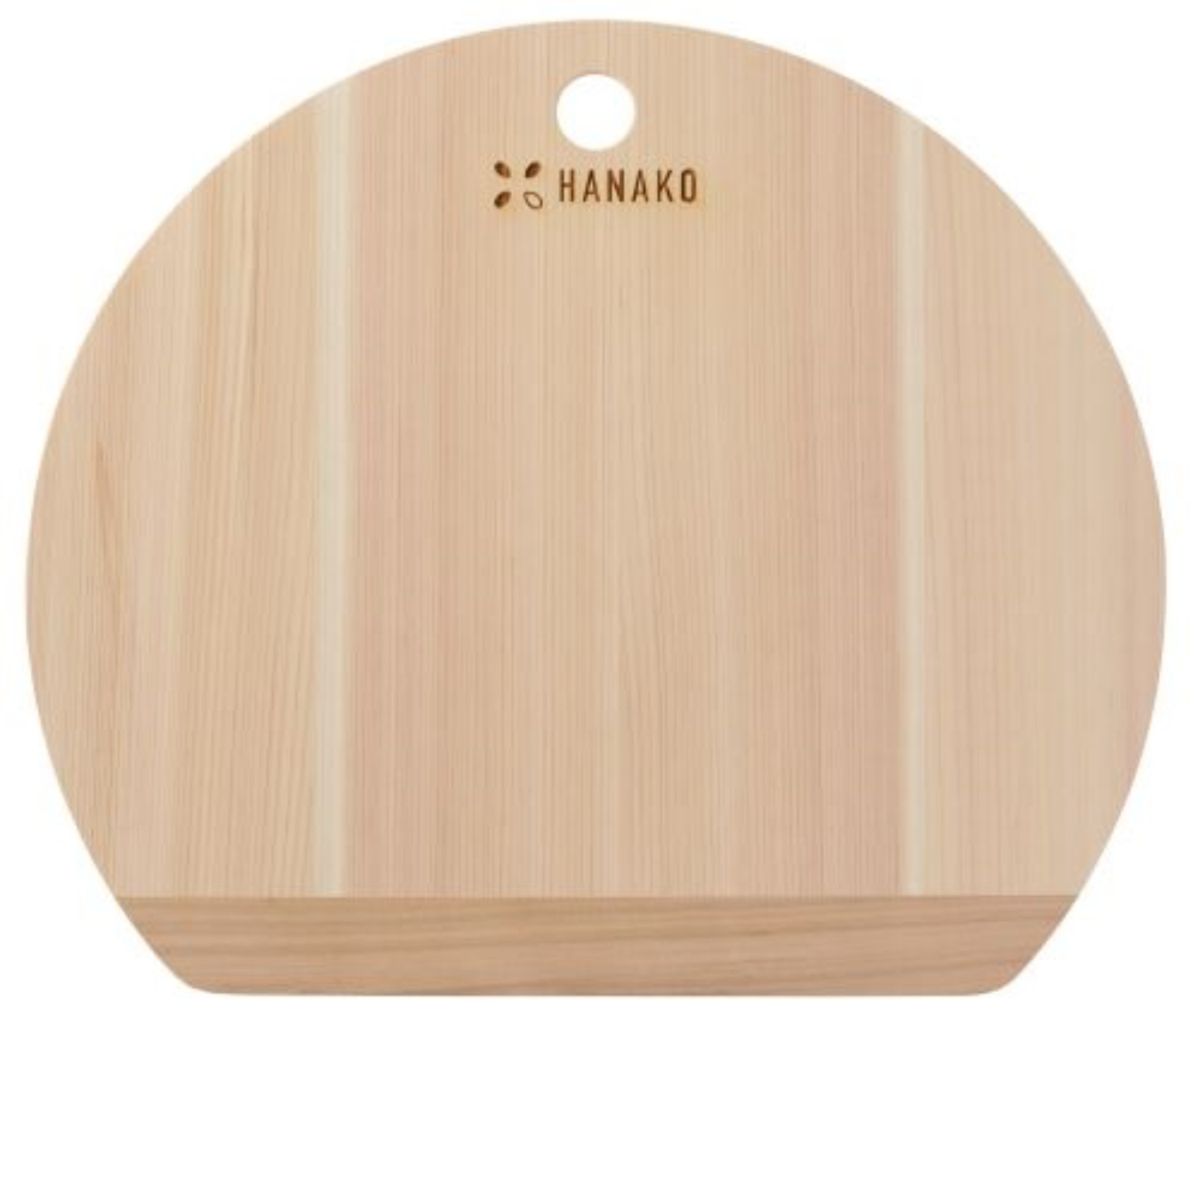 HANAKO/四万十ひのきまな板 D型 日本製 木製 ひのき 桜 コンパクト